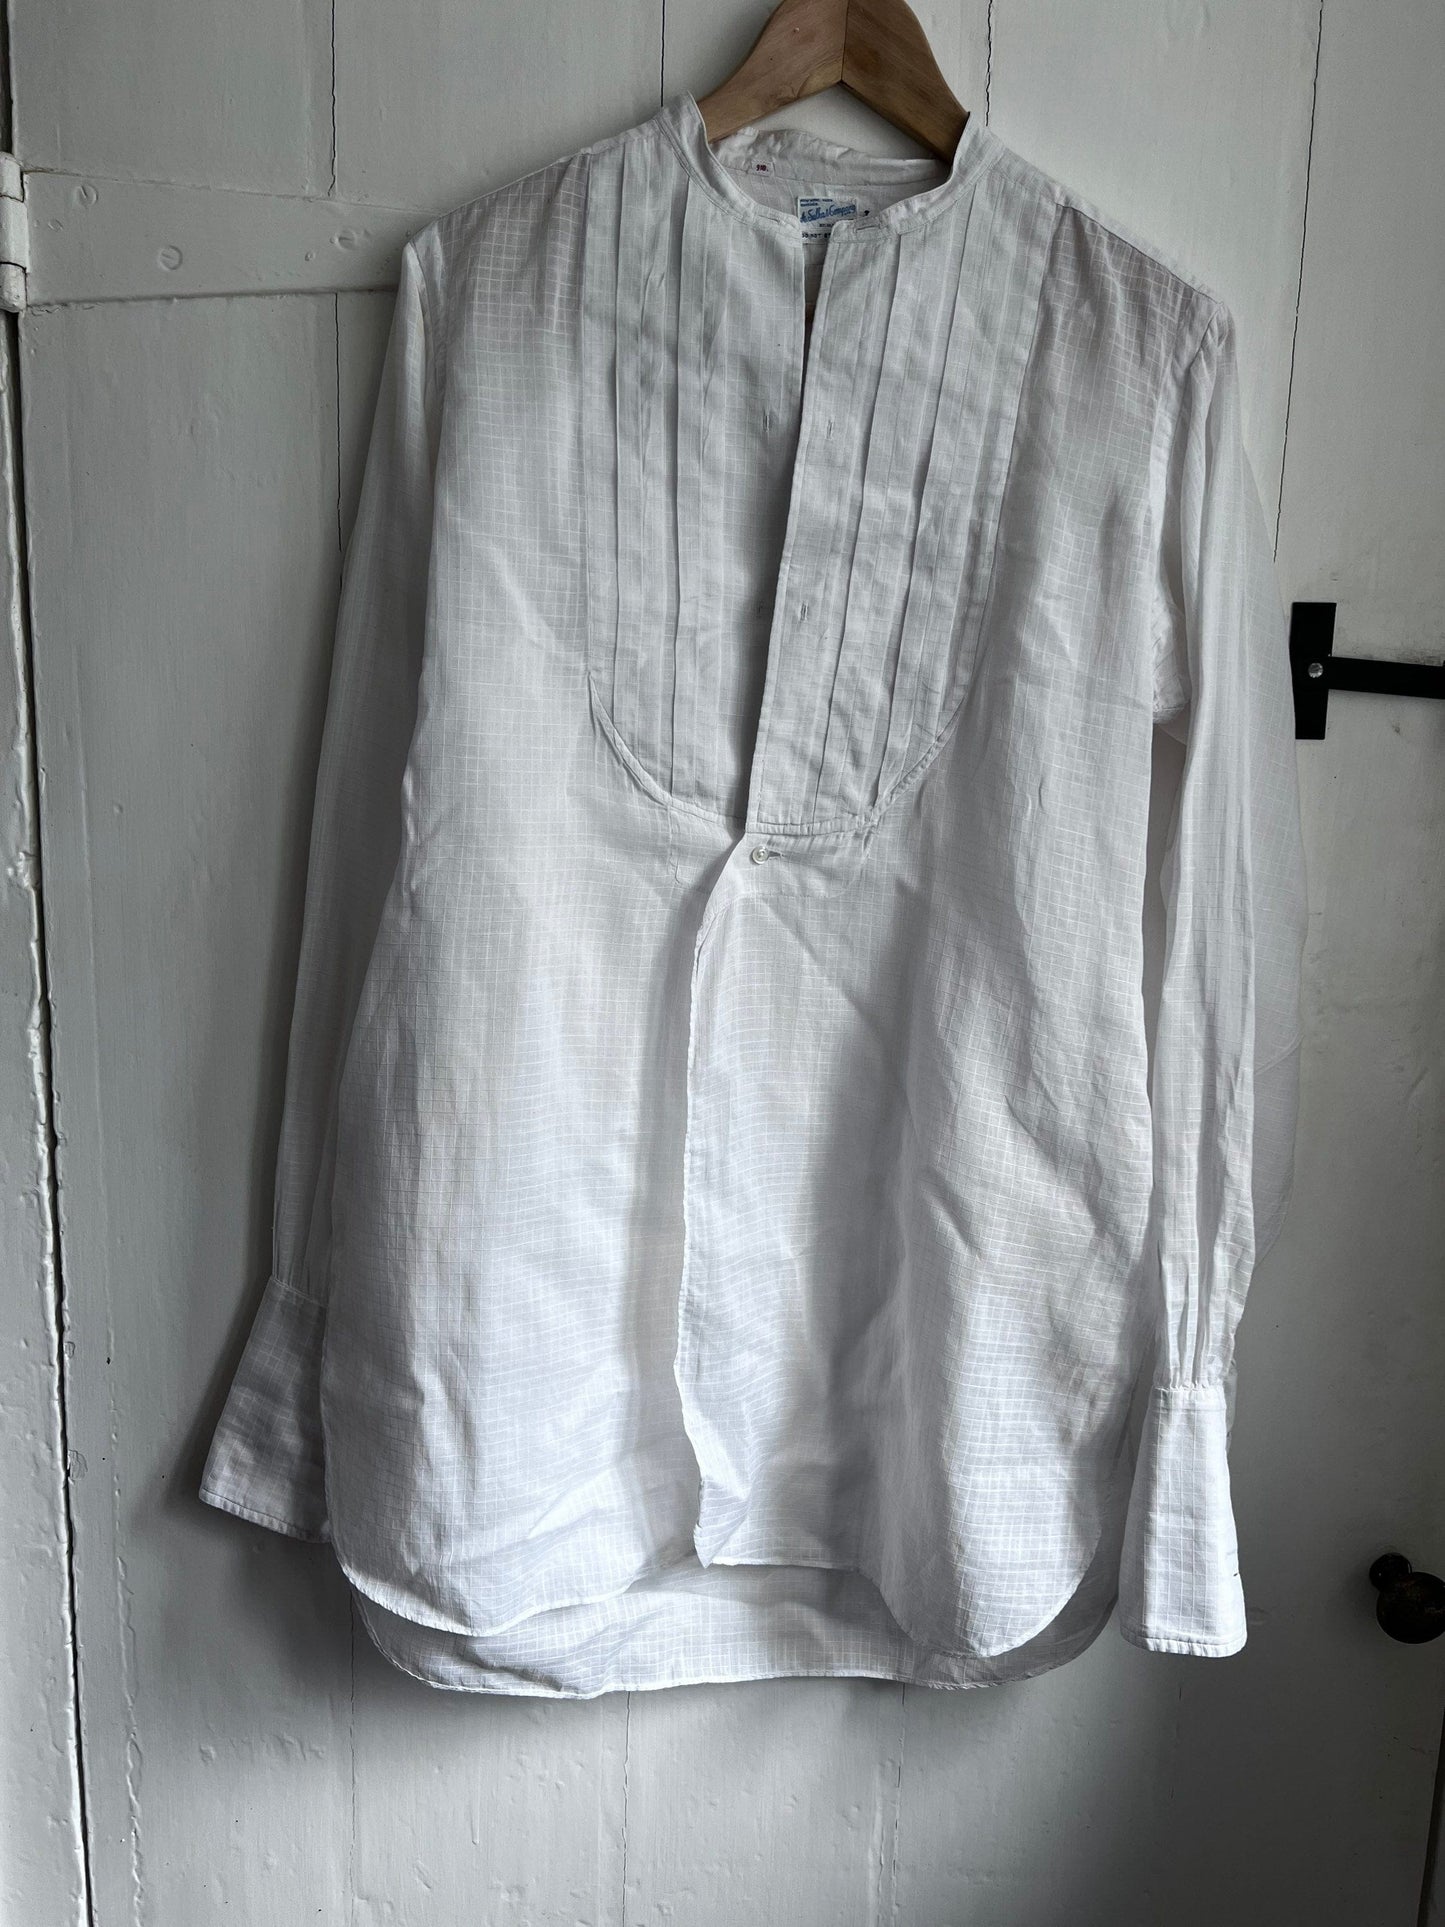 Vintage 1960s Dress Shirt A Sulka & Company Bespoke White Linen Check,Pleated,Tuxedo Shirt , vintage dress shirt, vintage shirt, men’s shirt